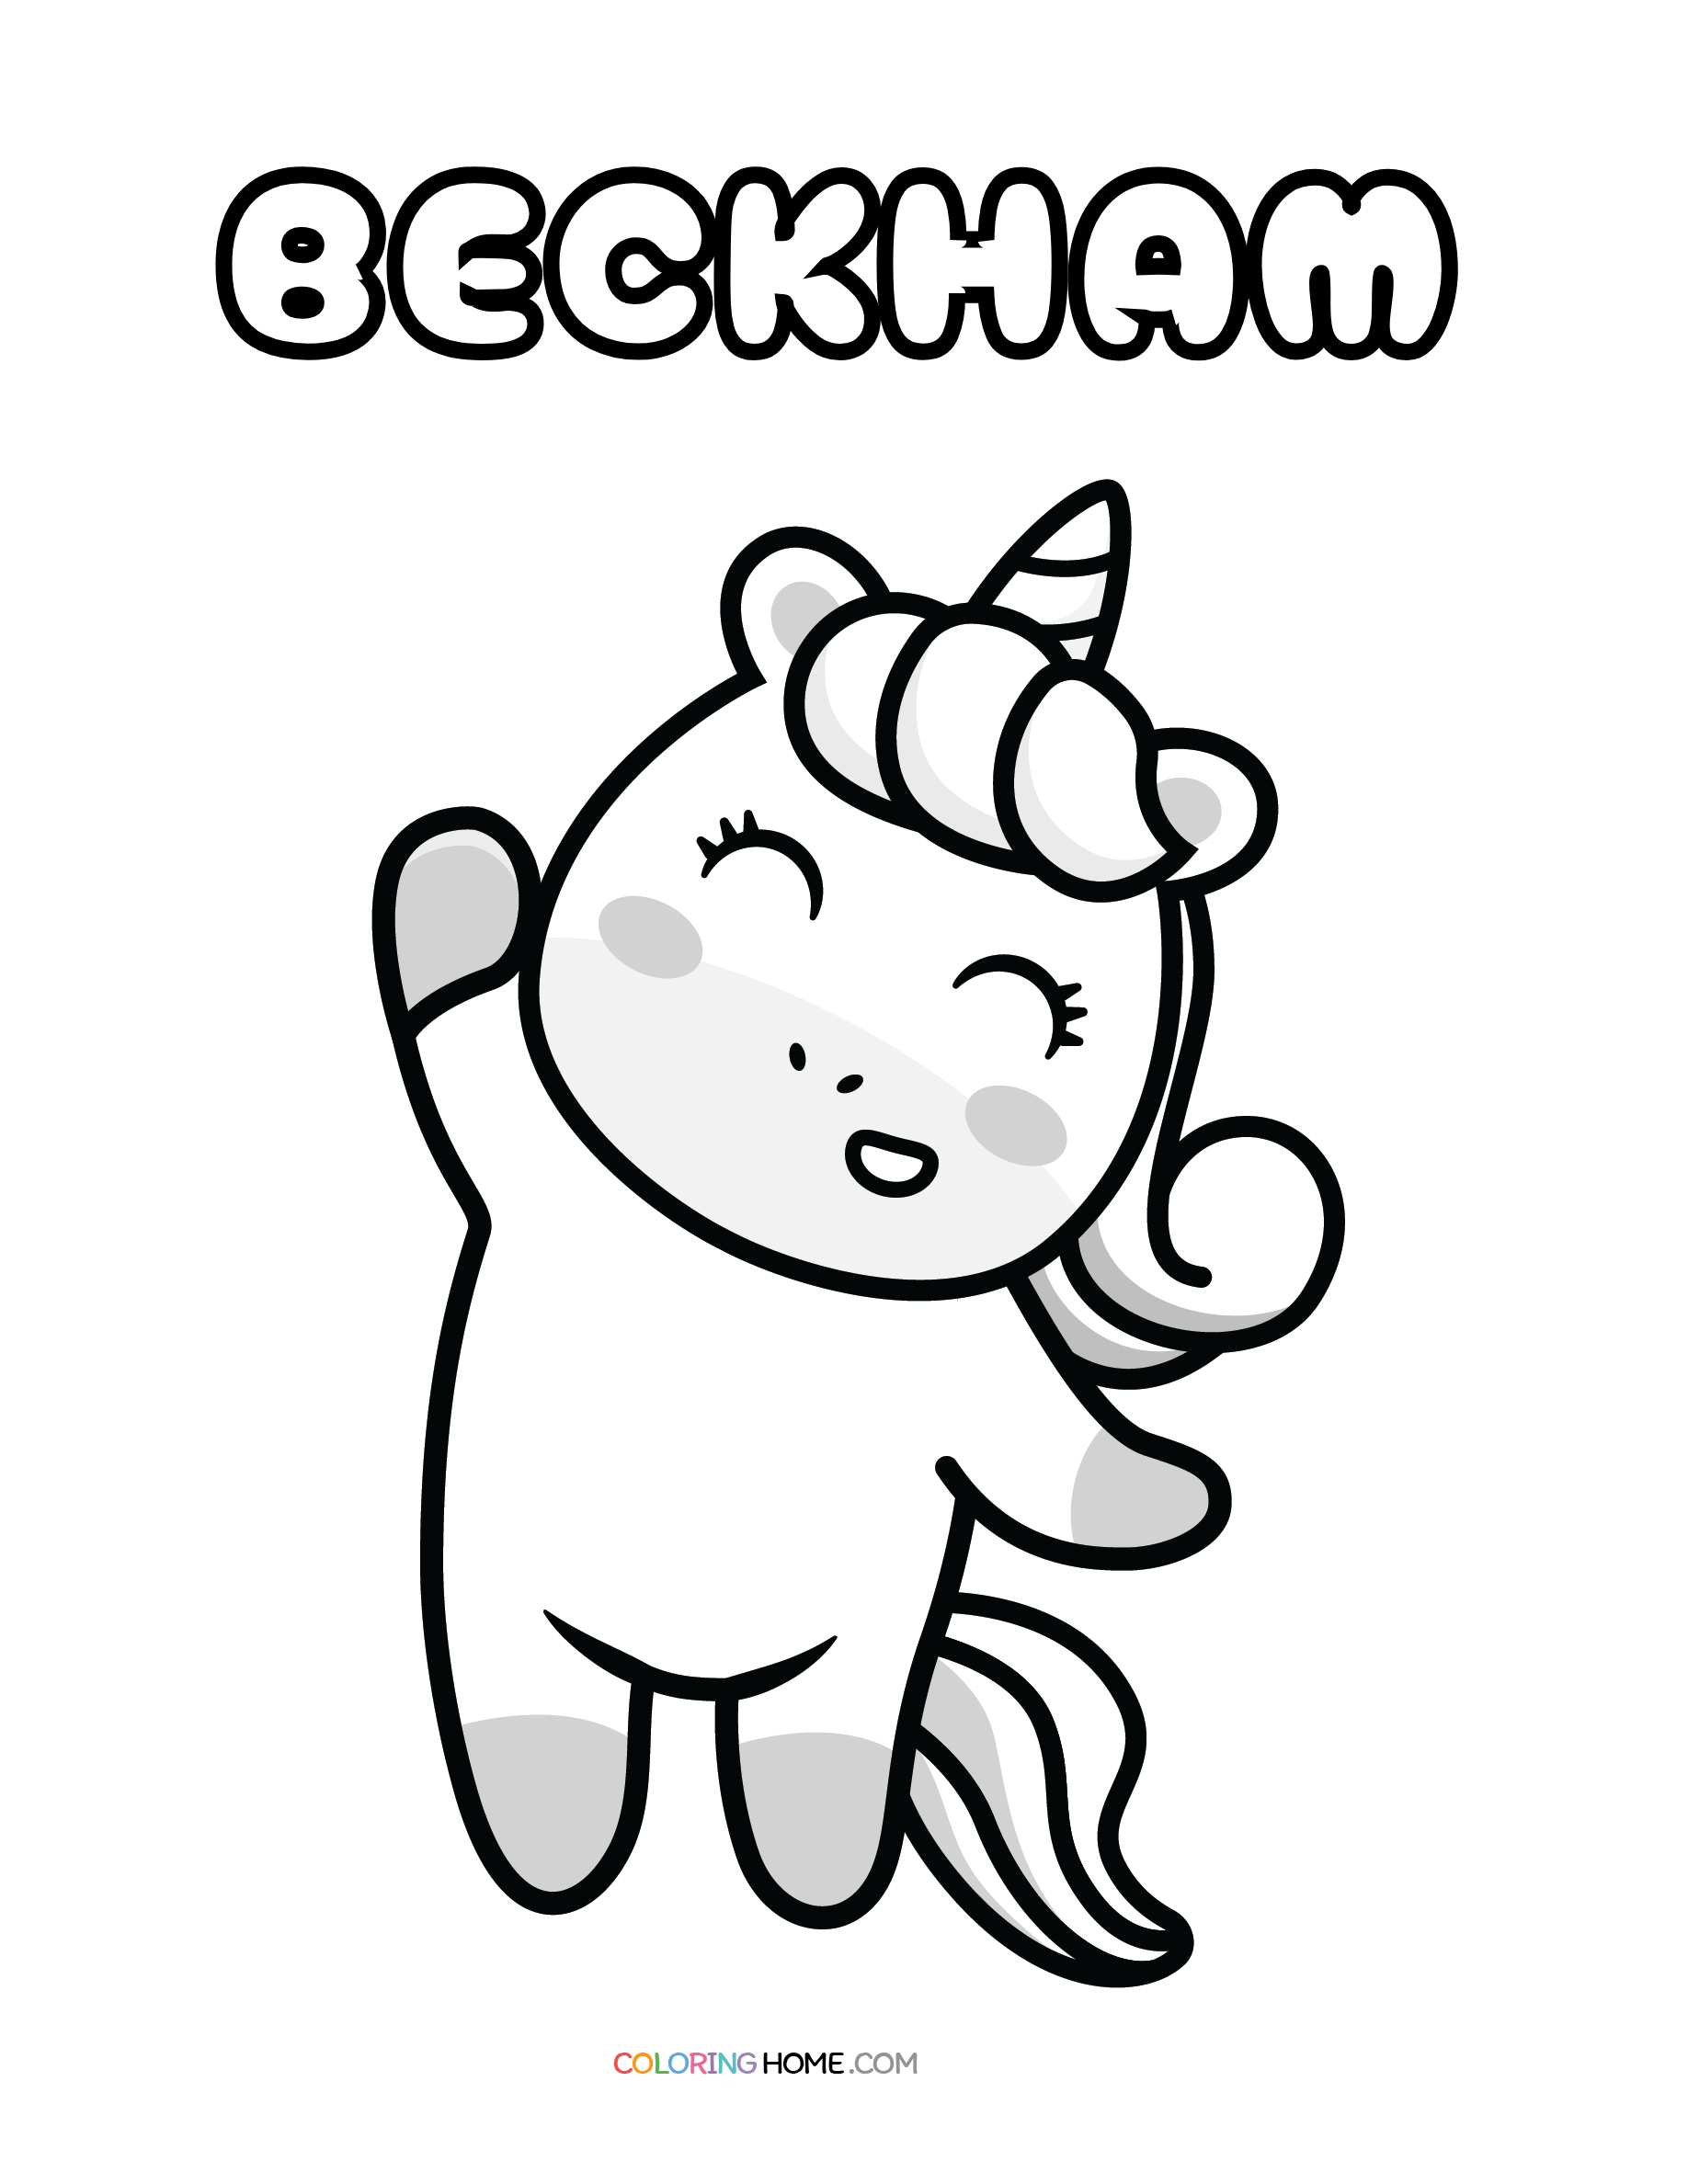 Beckham unicorn coloring page